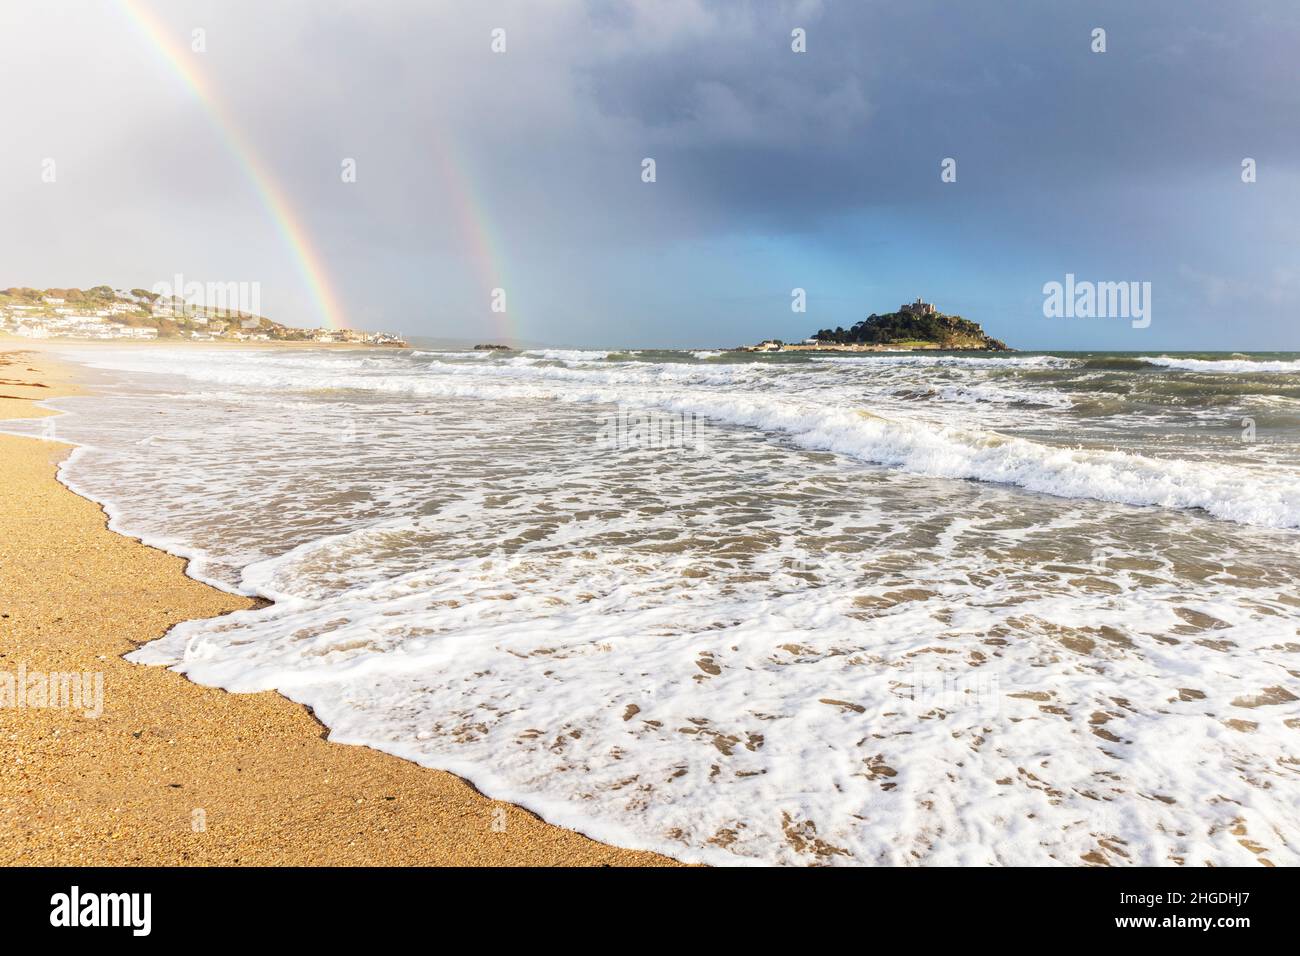 St Michael's Mount, Cornwall, Reino Unido, Inglaterra, arco iris doble, Marea viniendo en, Cornish,costa,costa,océano,paisaje marino,mar,playa,arena,arcoiris, Foto de stock